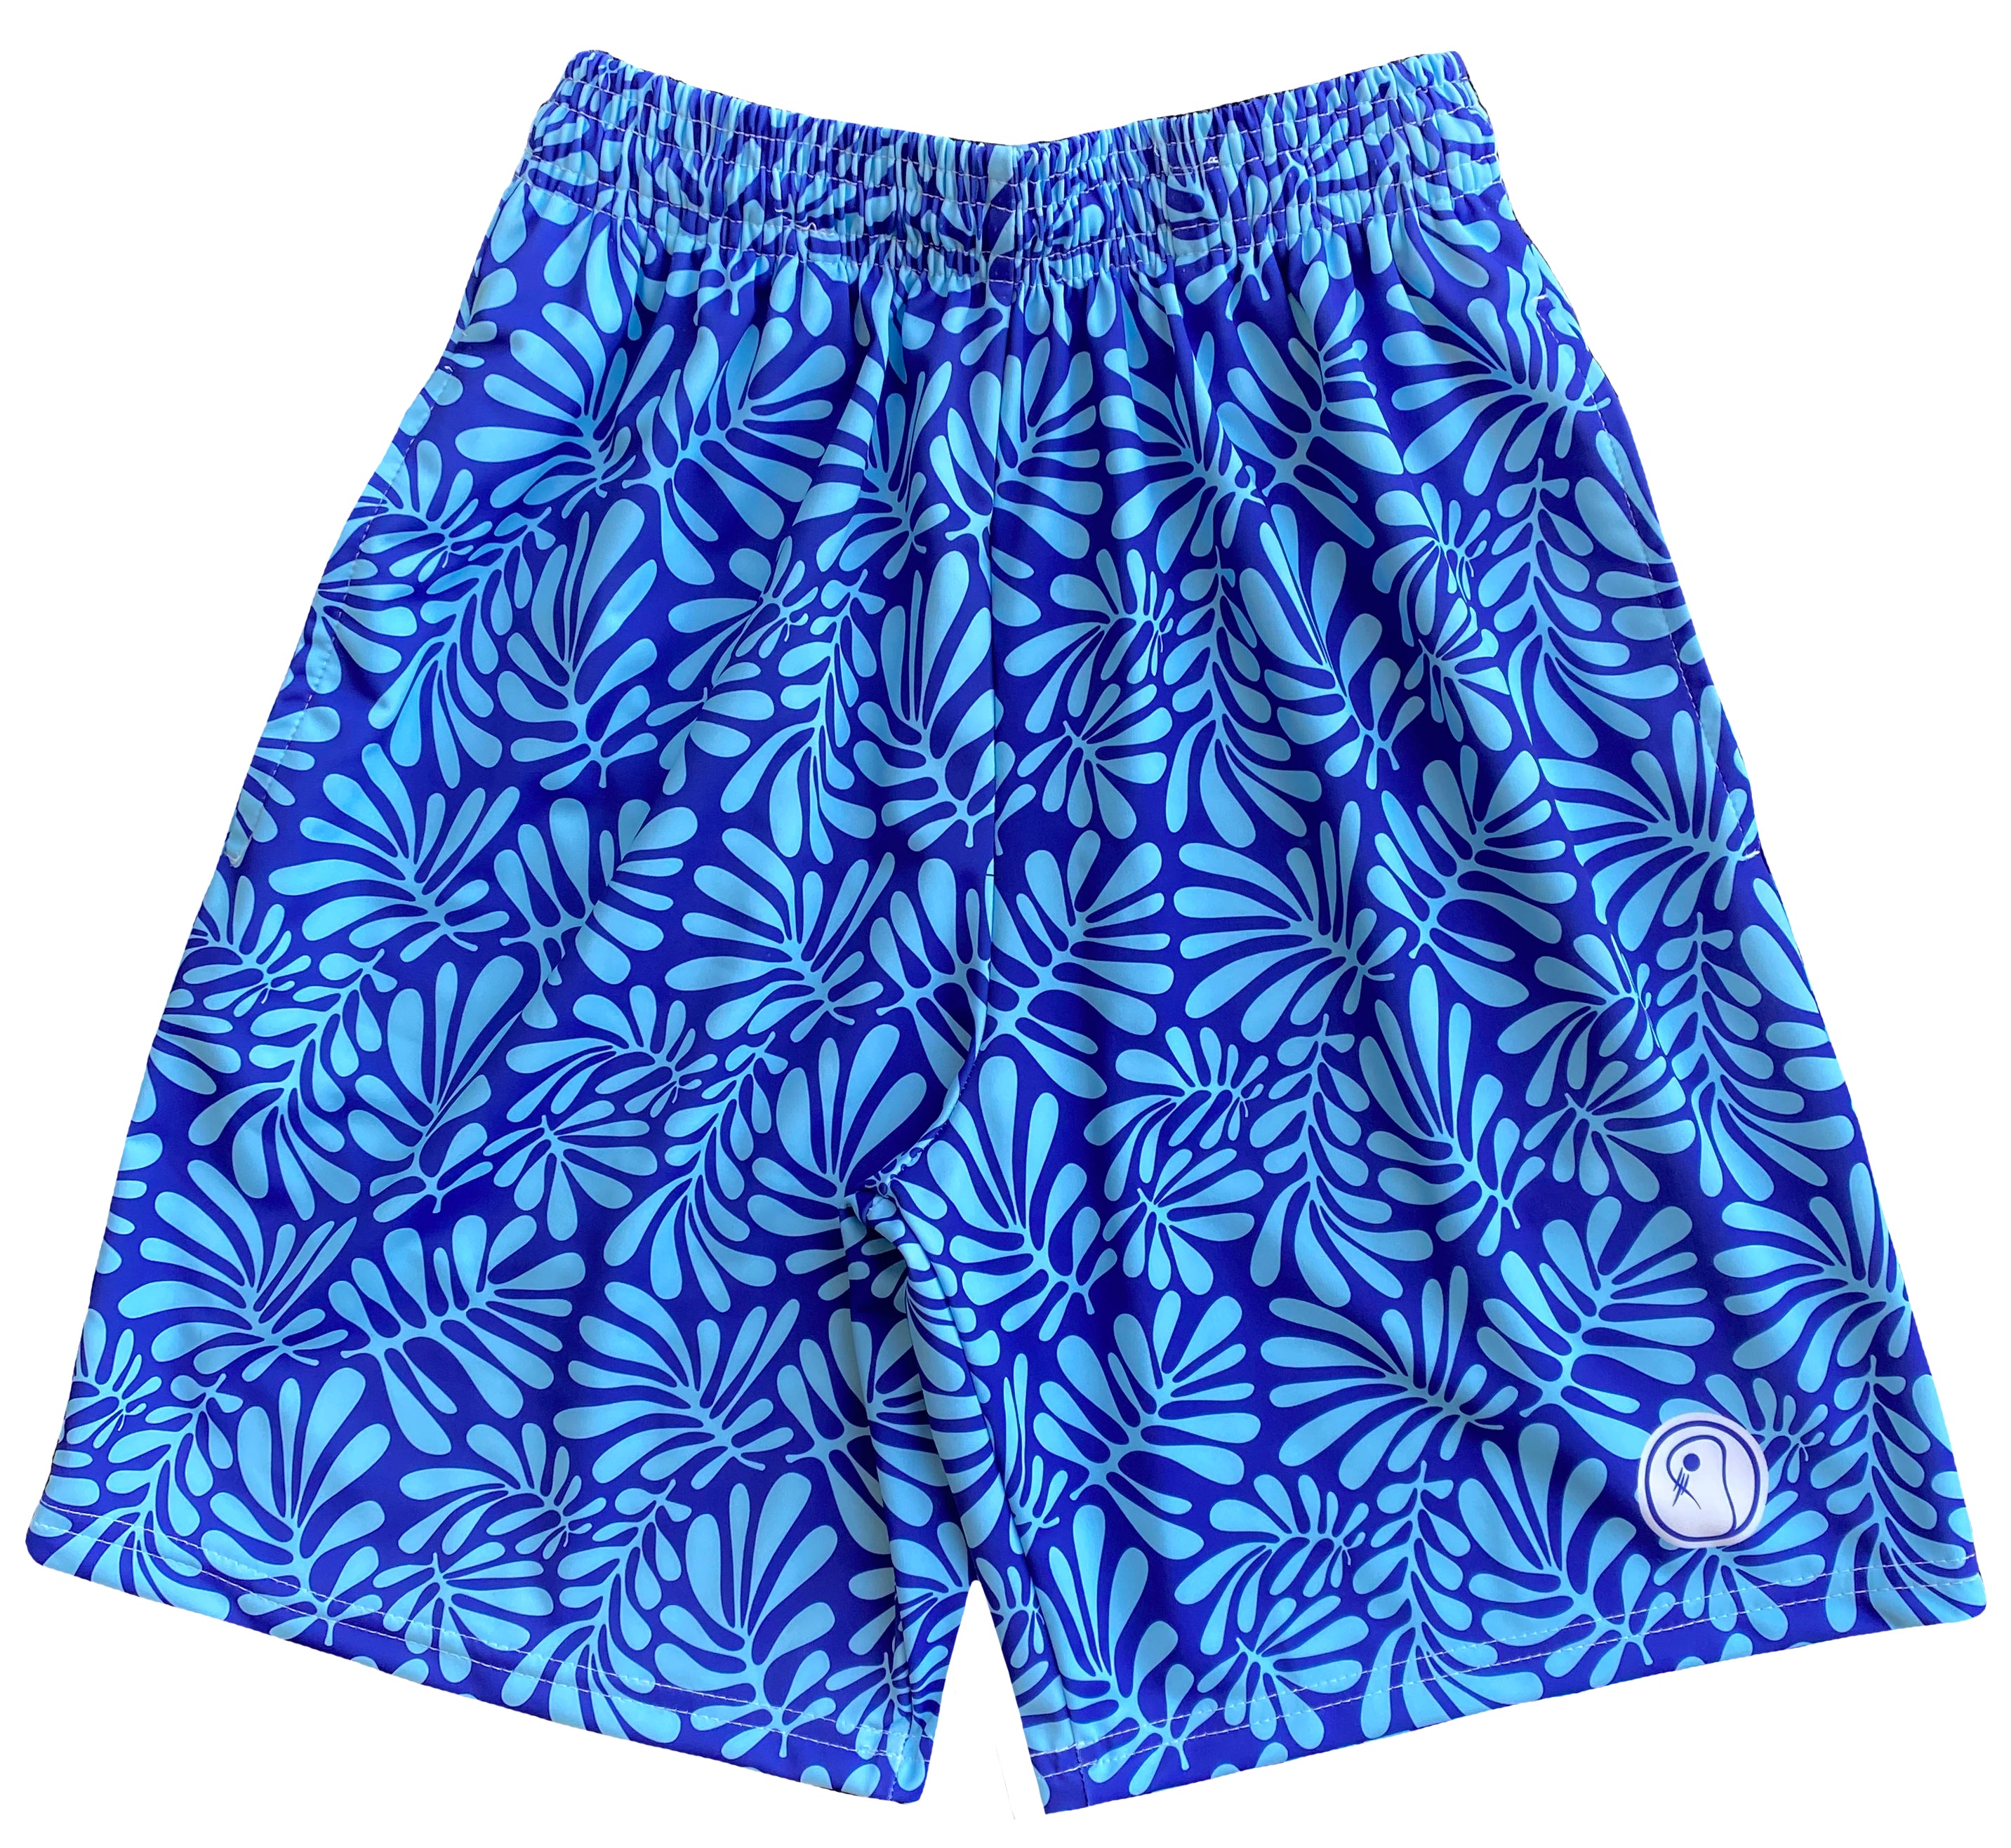 Boys Tropical Lacrosse Shorts - Blue